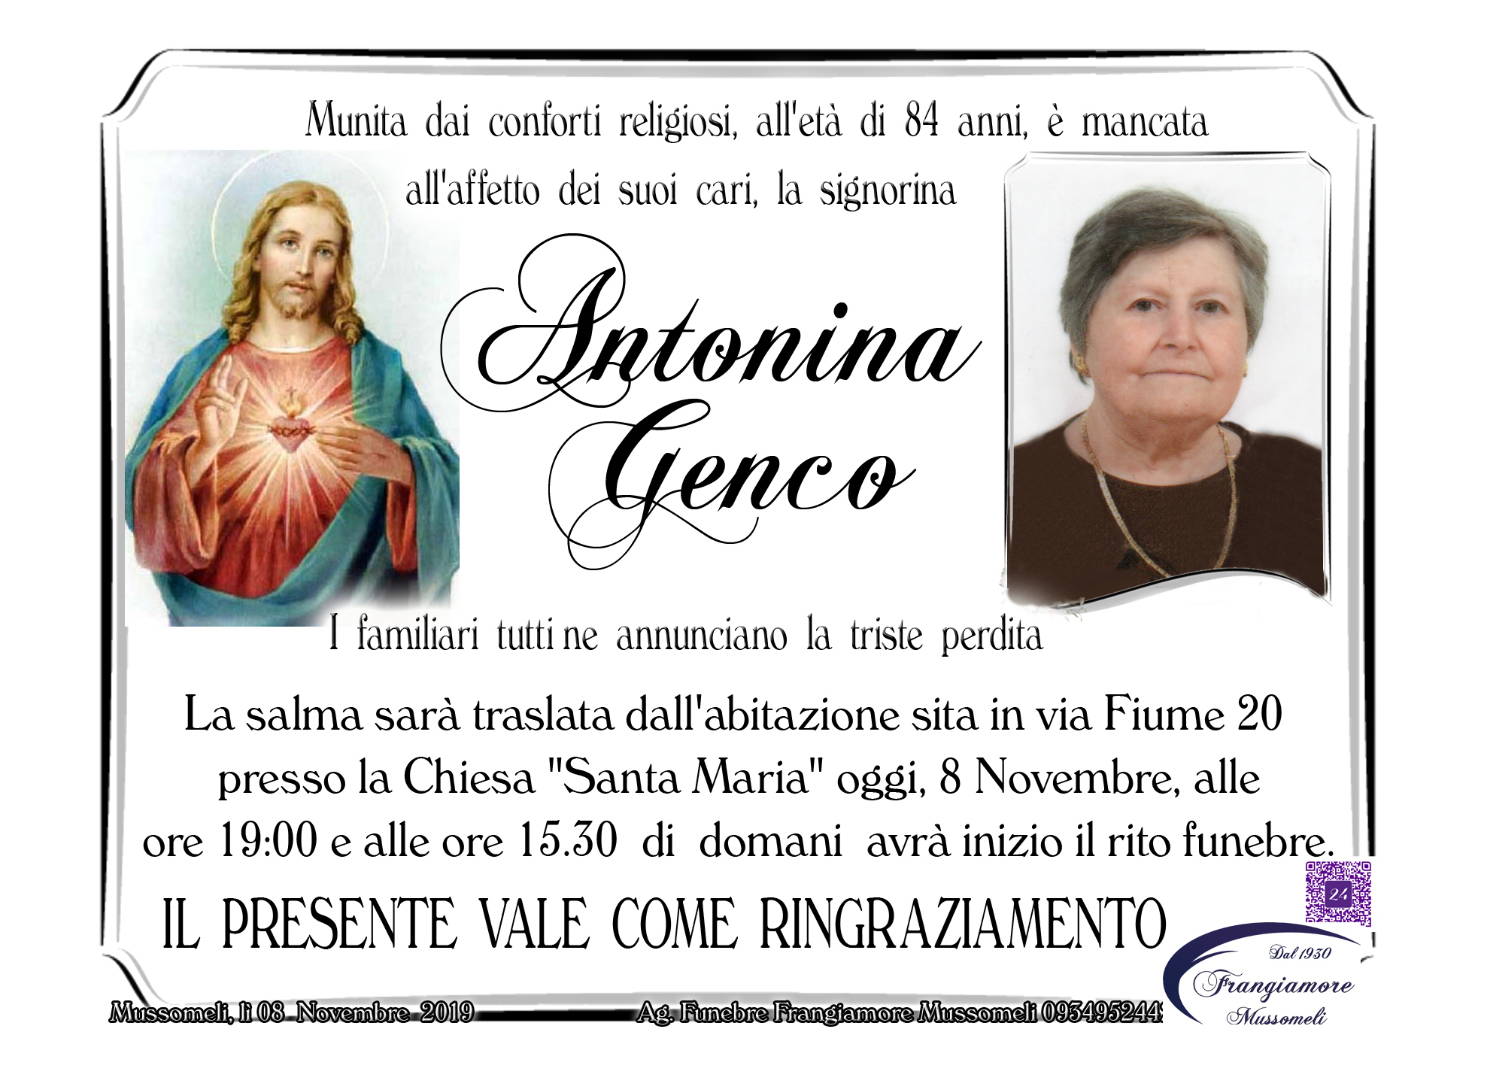 Antonina Genco